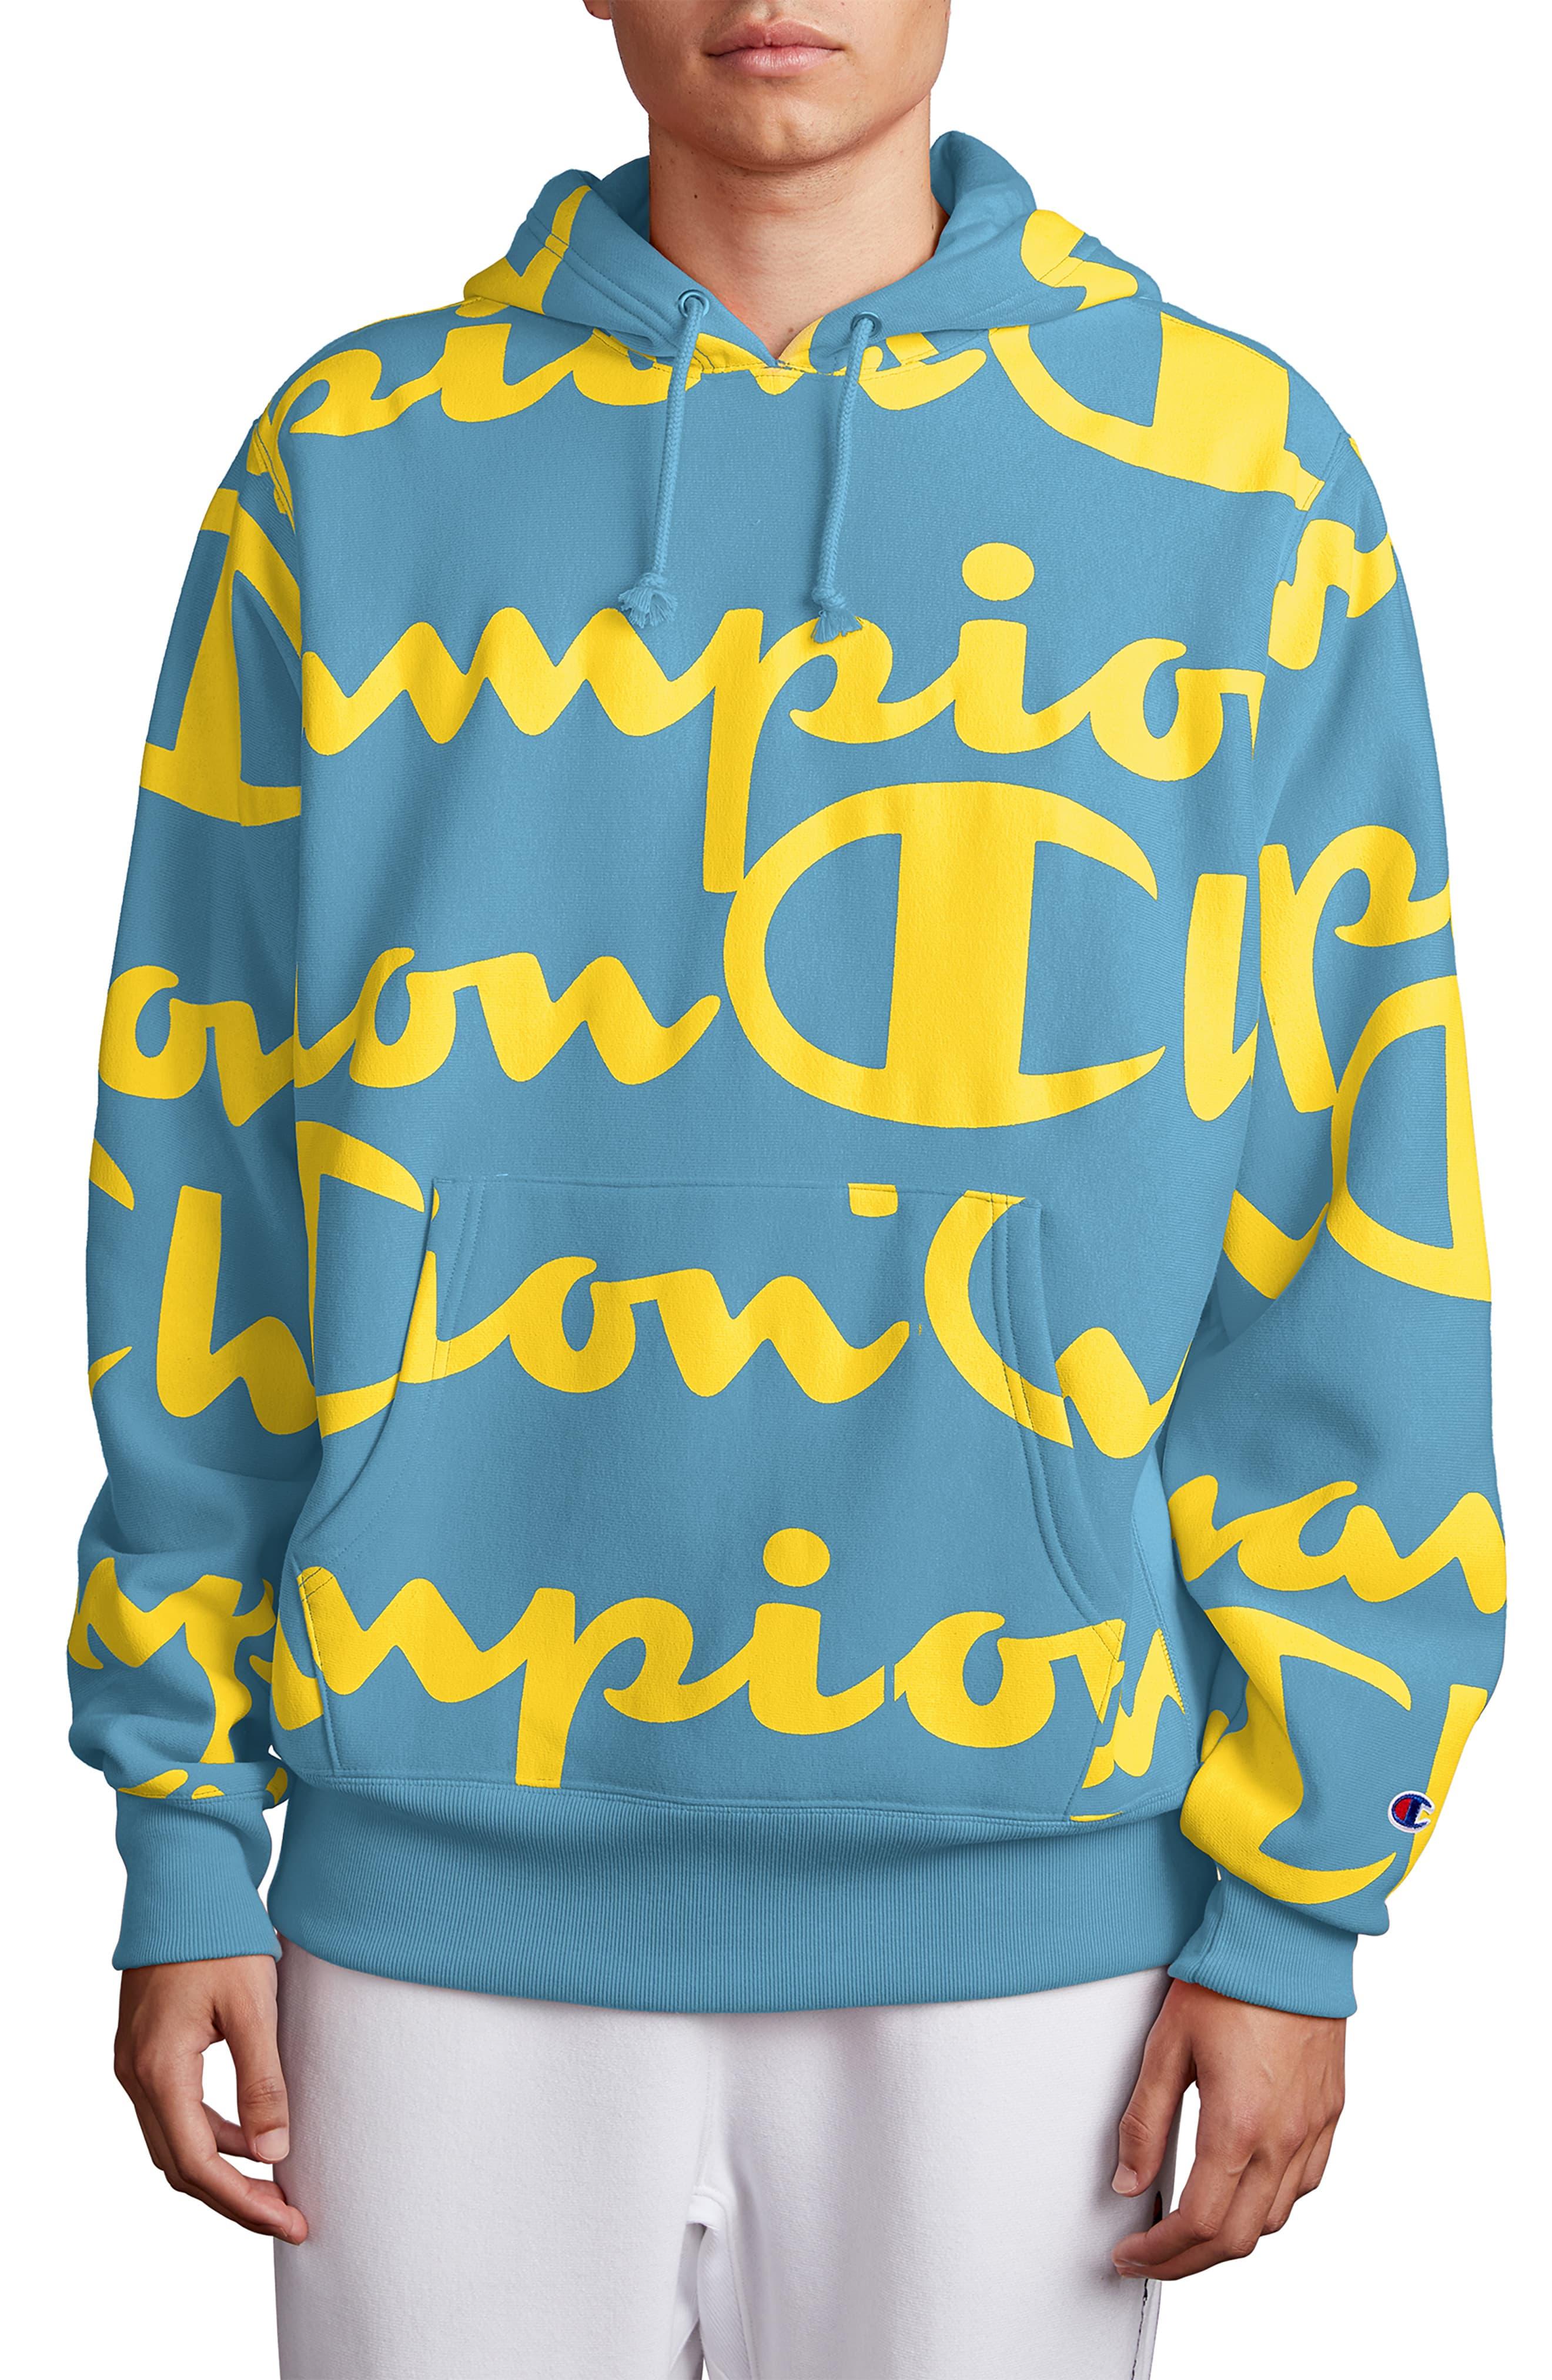 blue and yellow champion sweatshirt